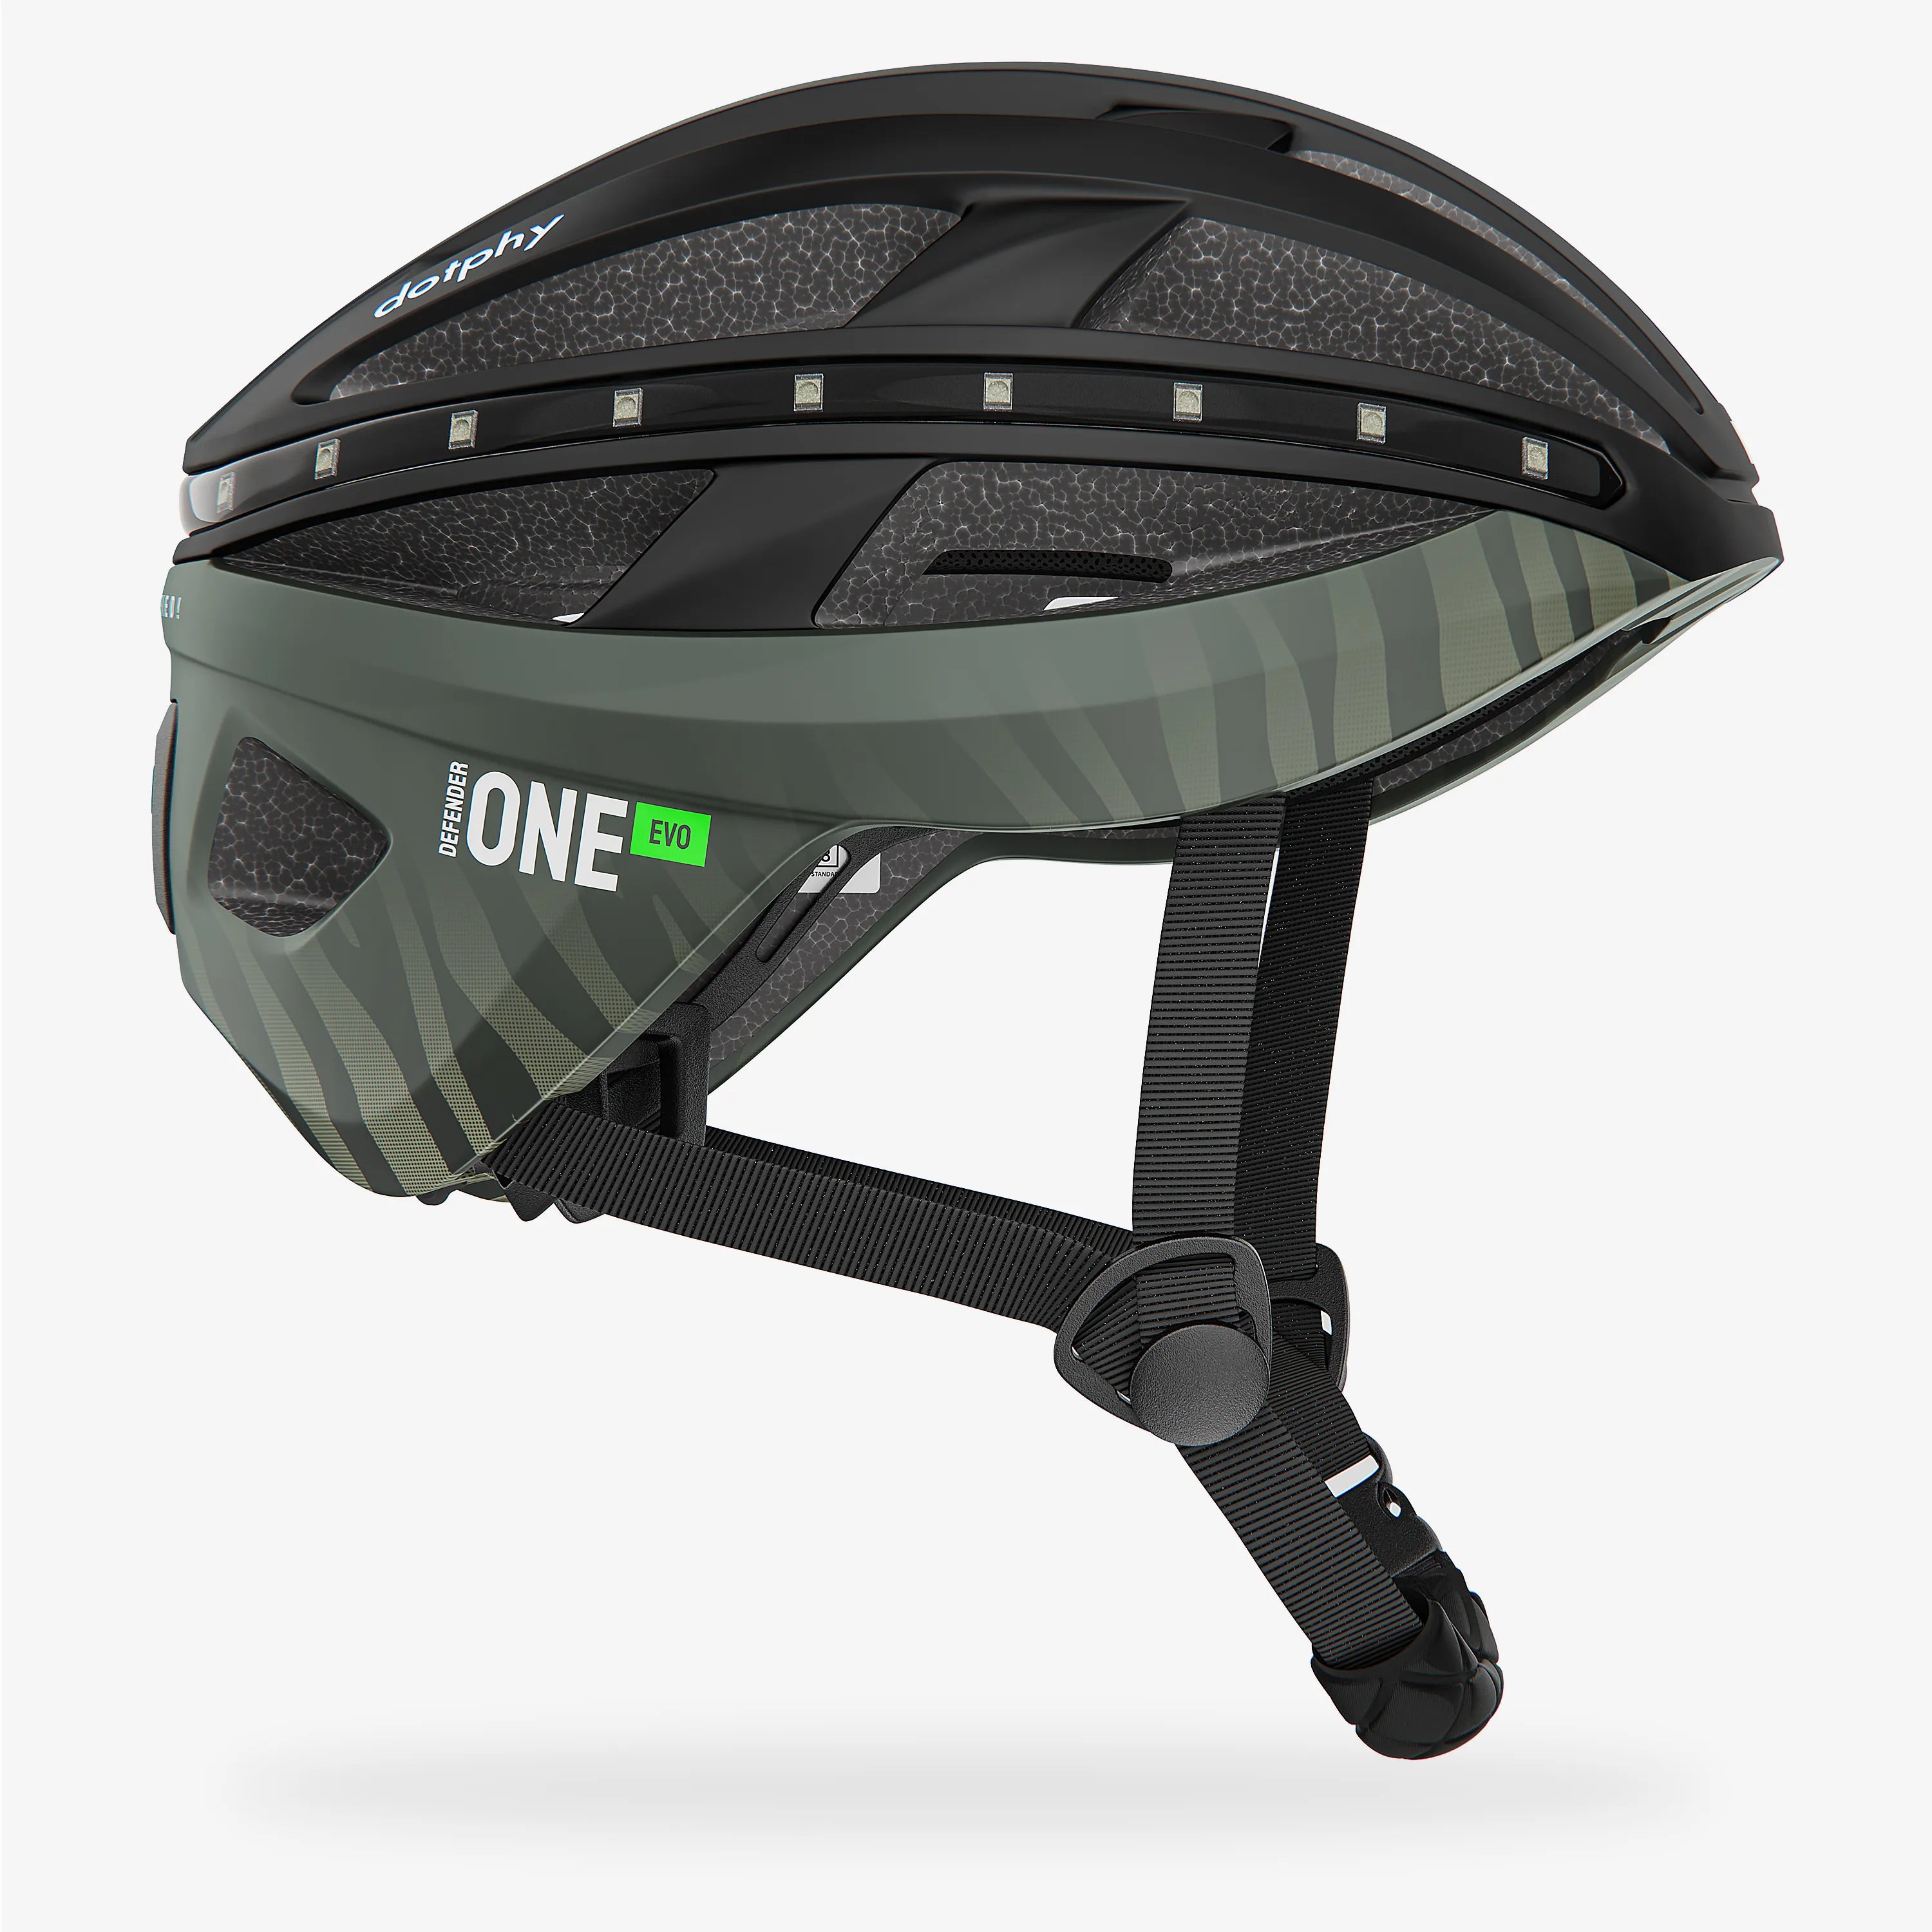 Defender One Evo Jet Black Bike Helmet 黒の自転車ヘルメット